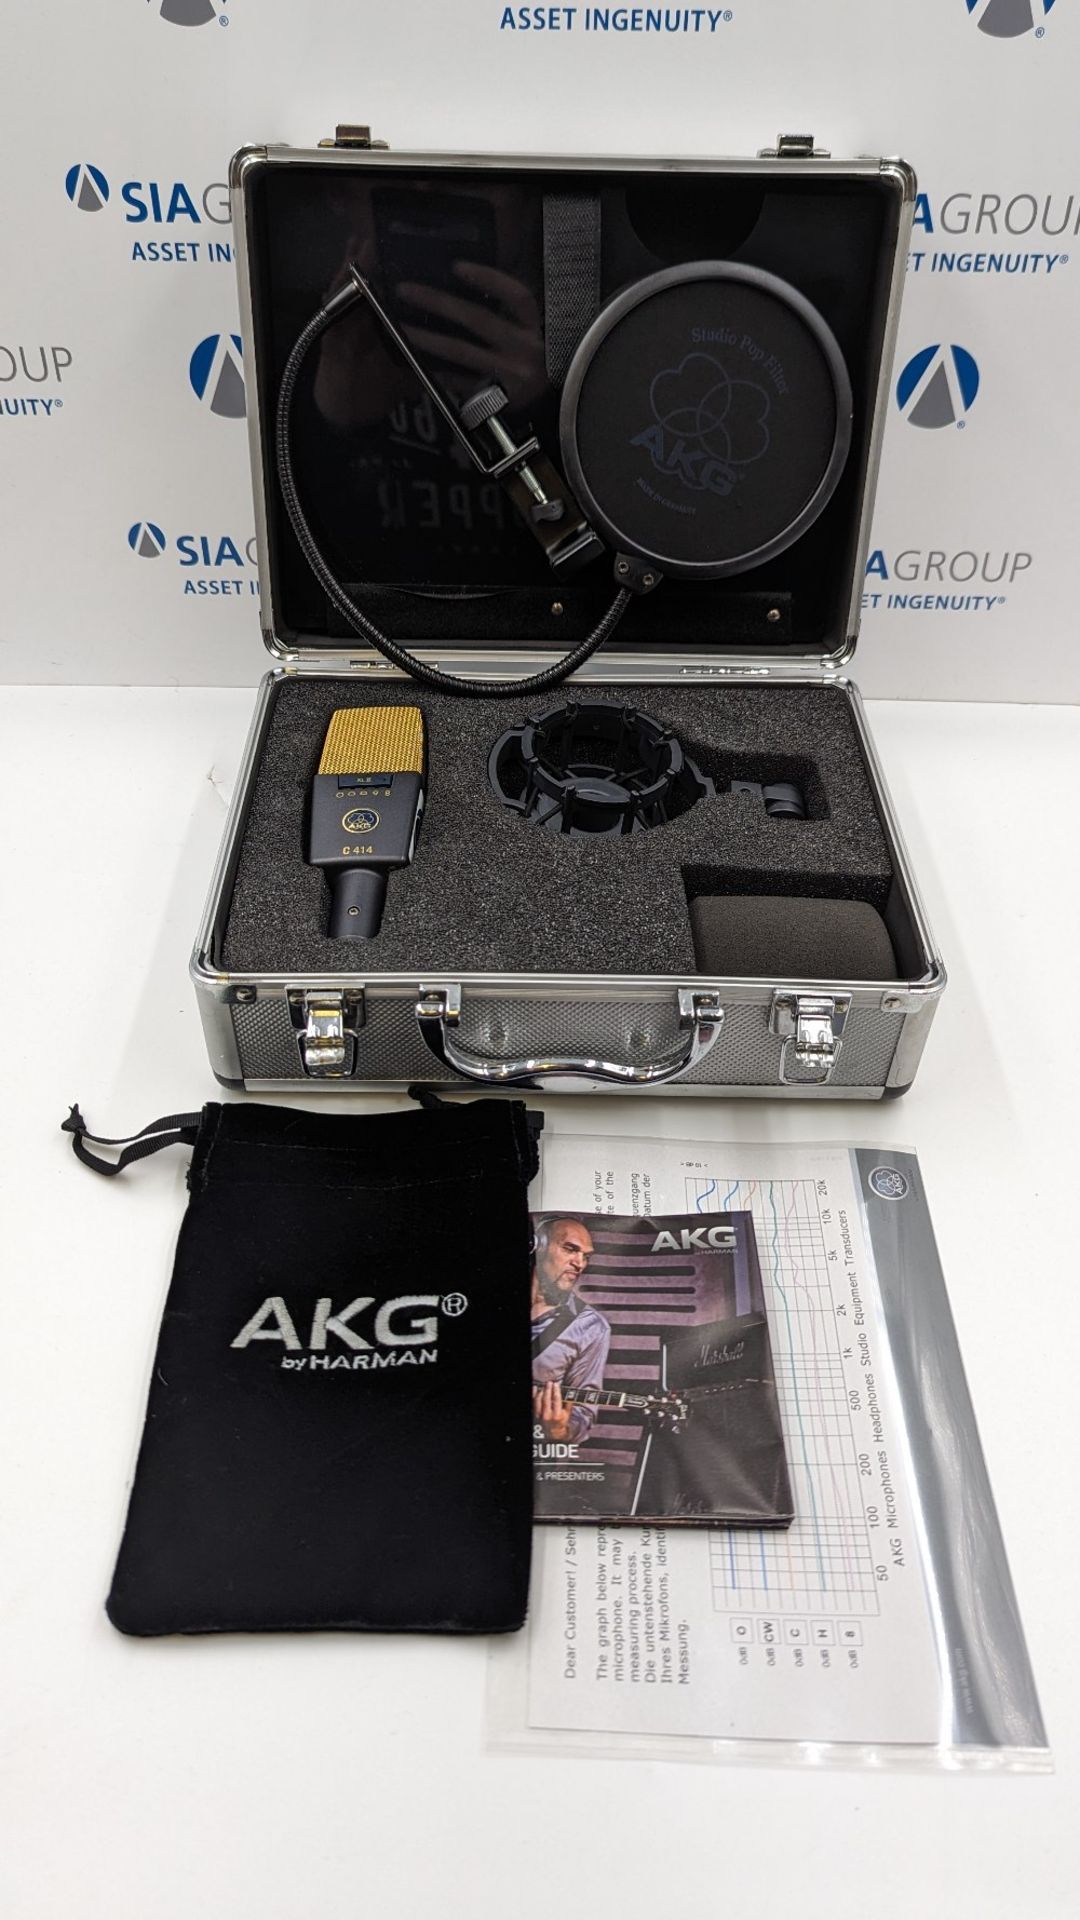 AKG C414 XL-II Microphone Kit